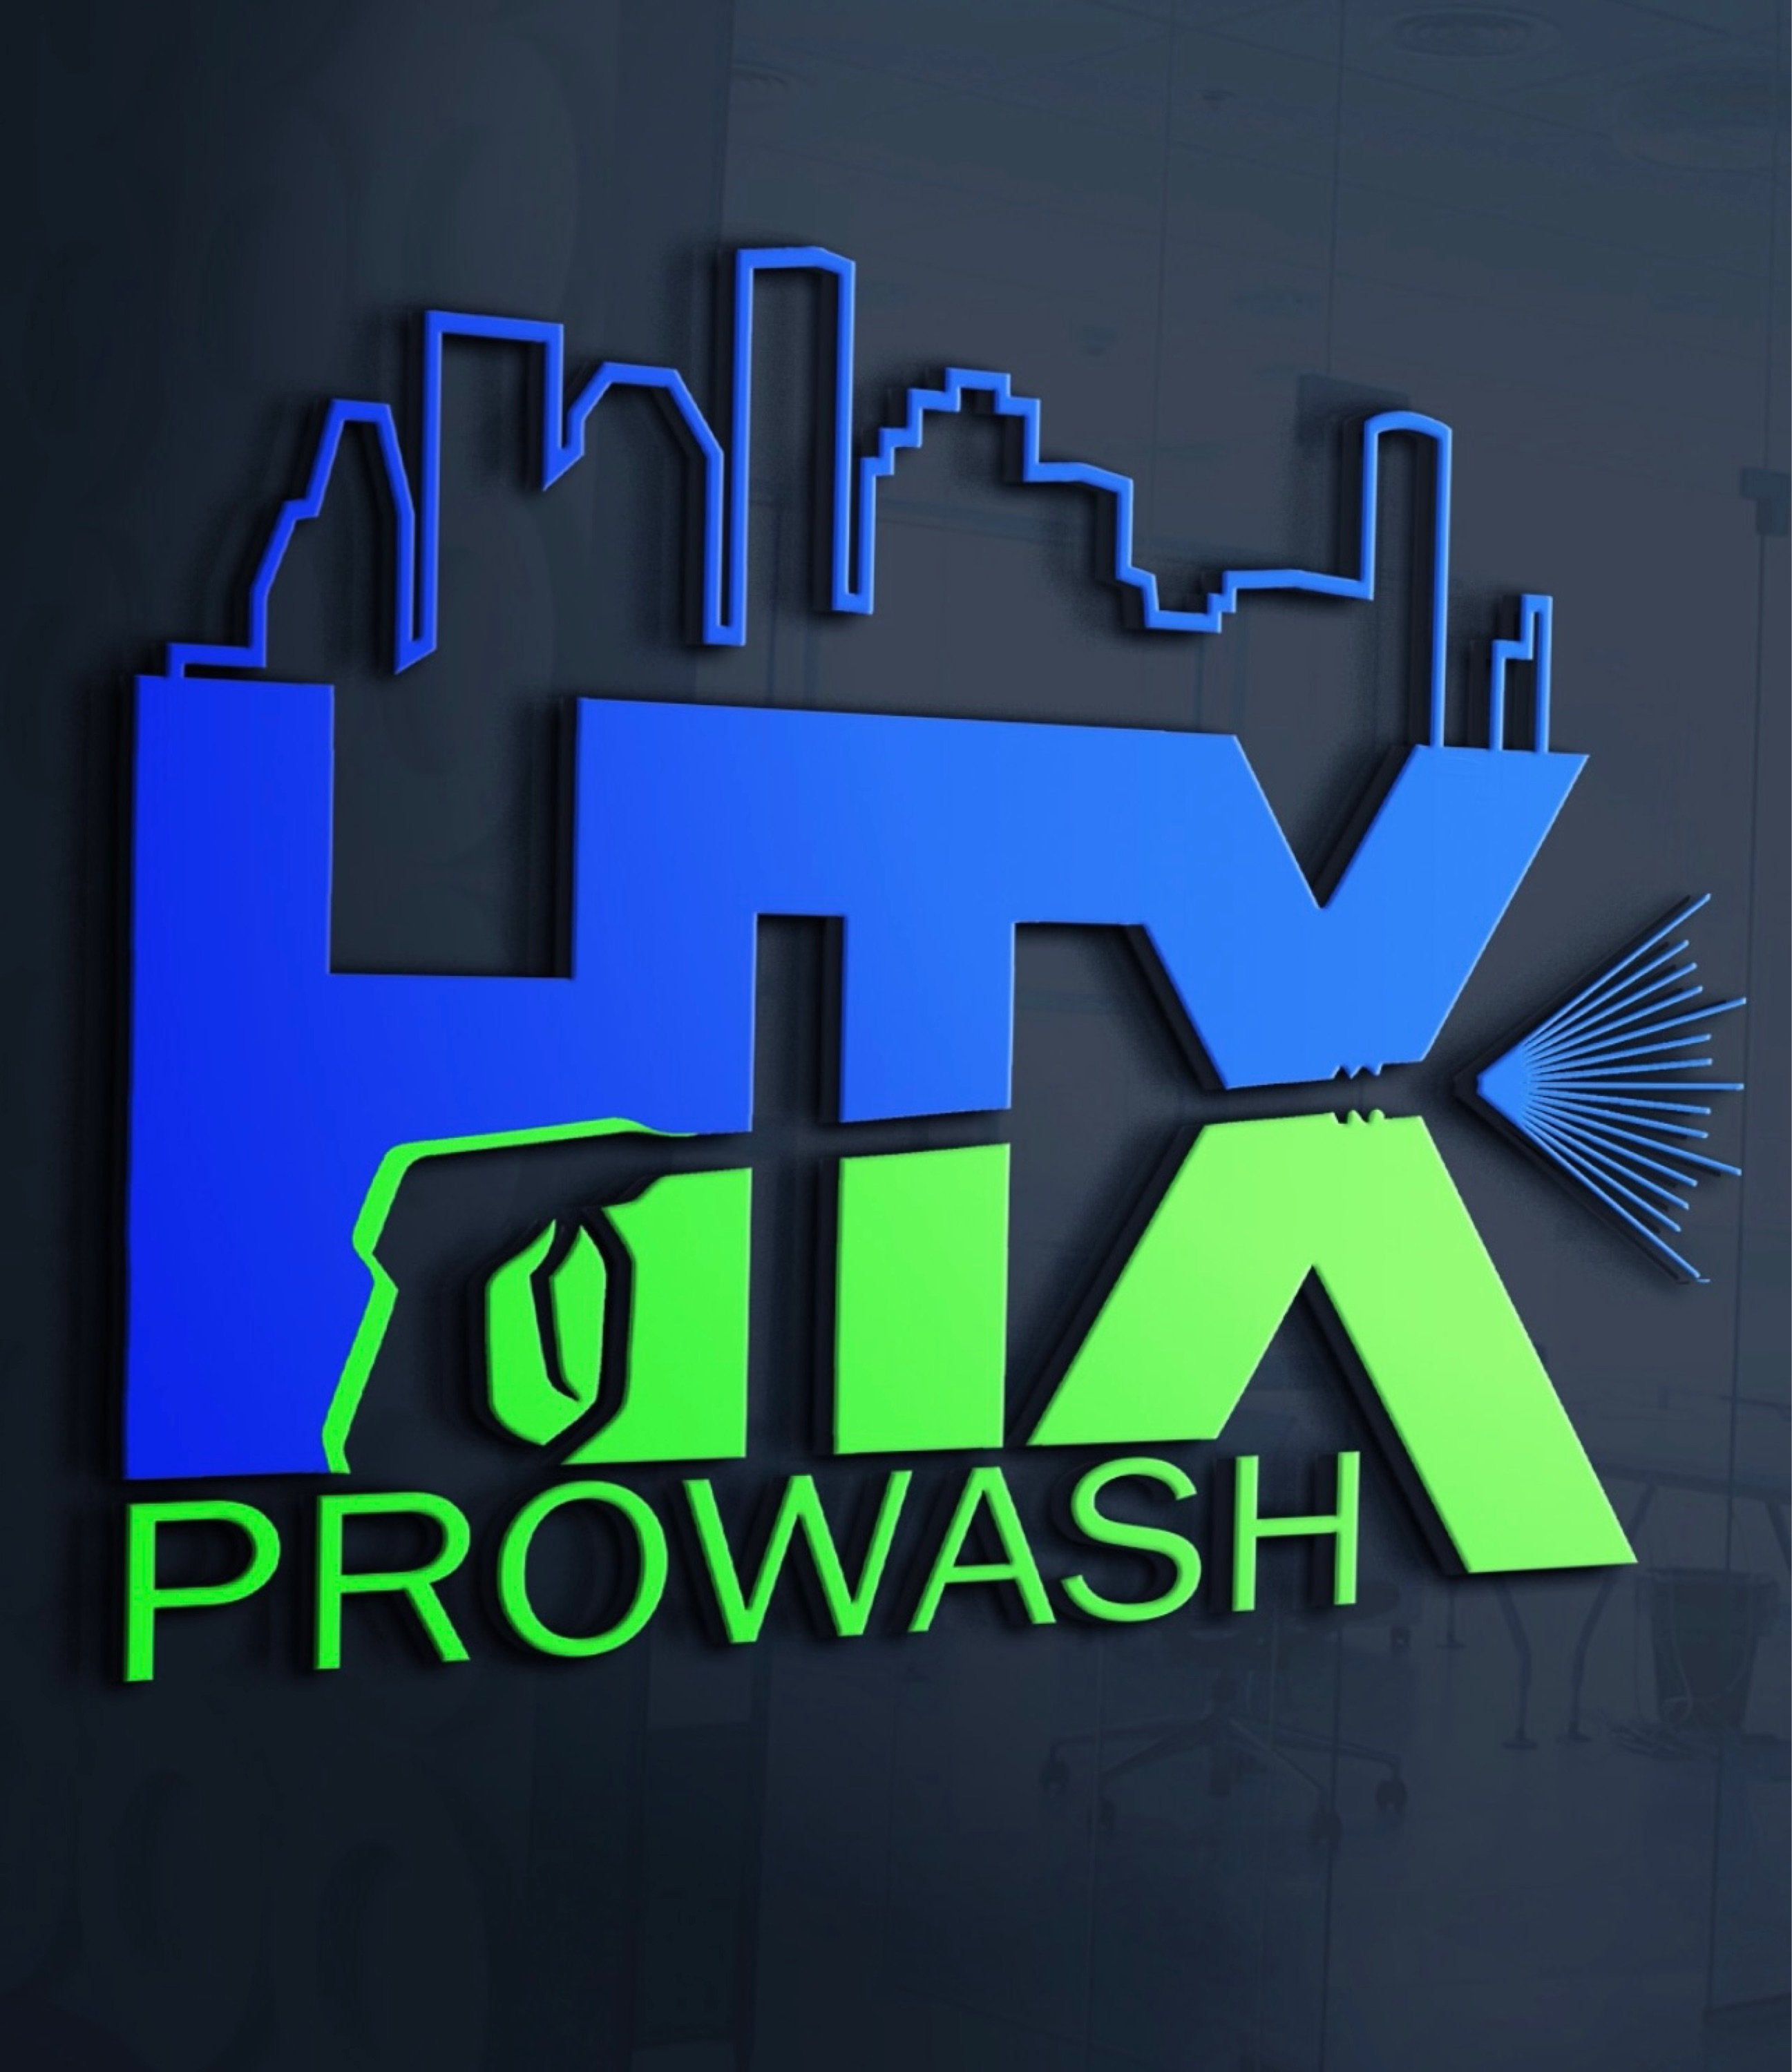 HTX PROWASH Logo